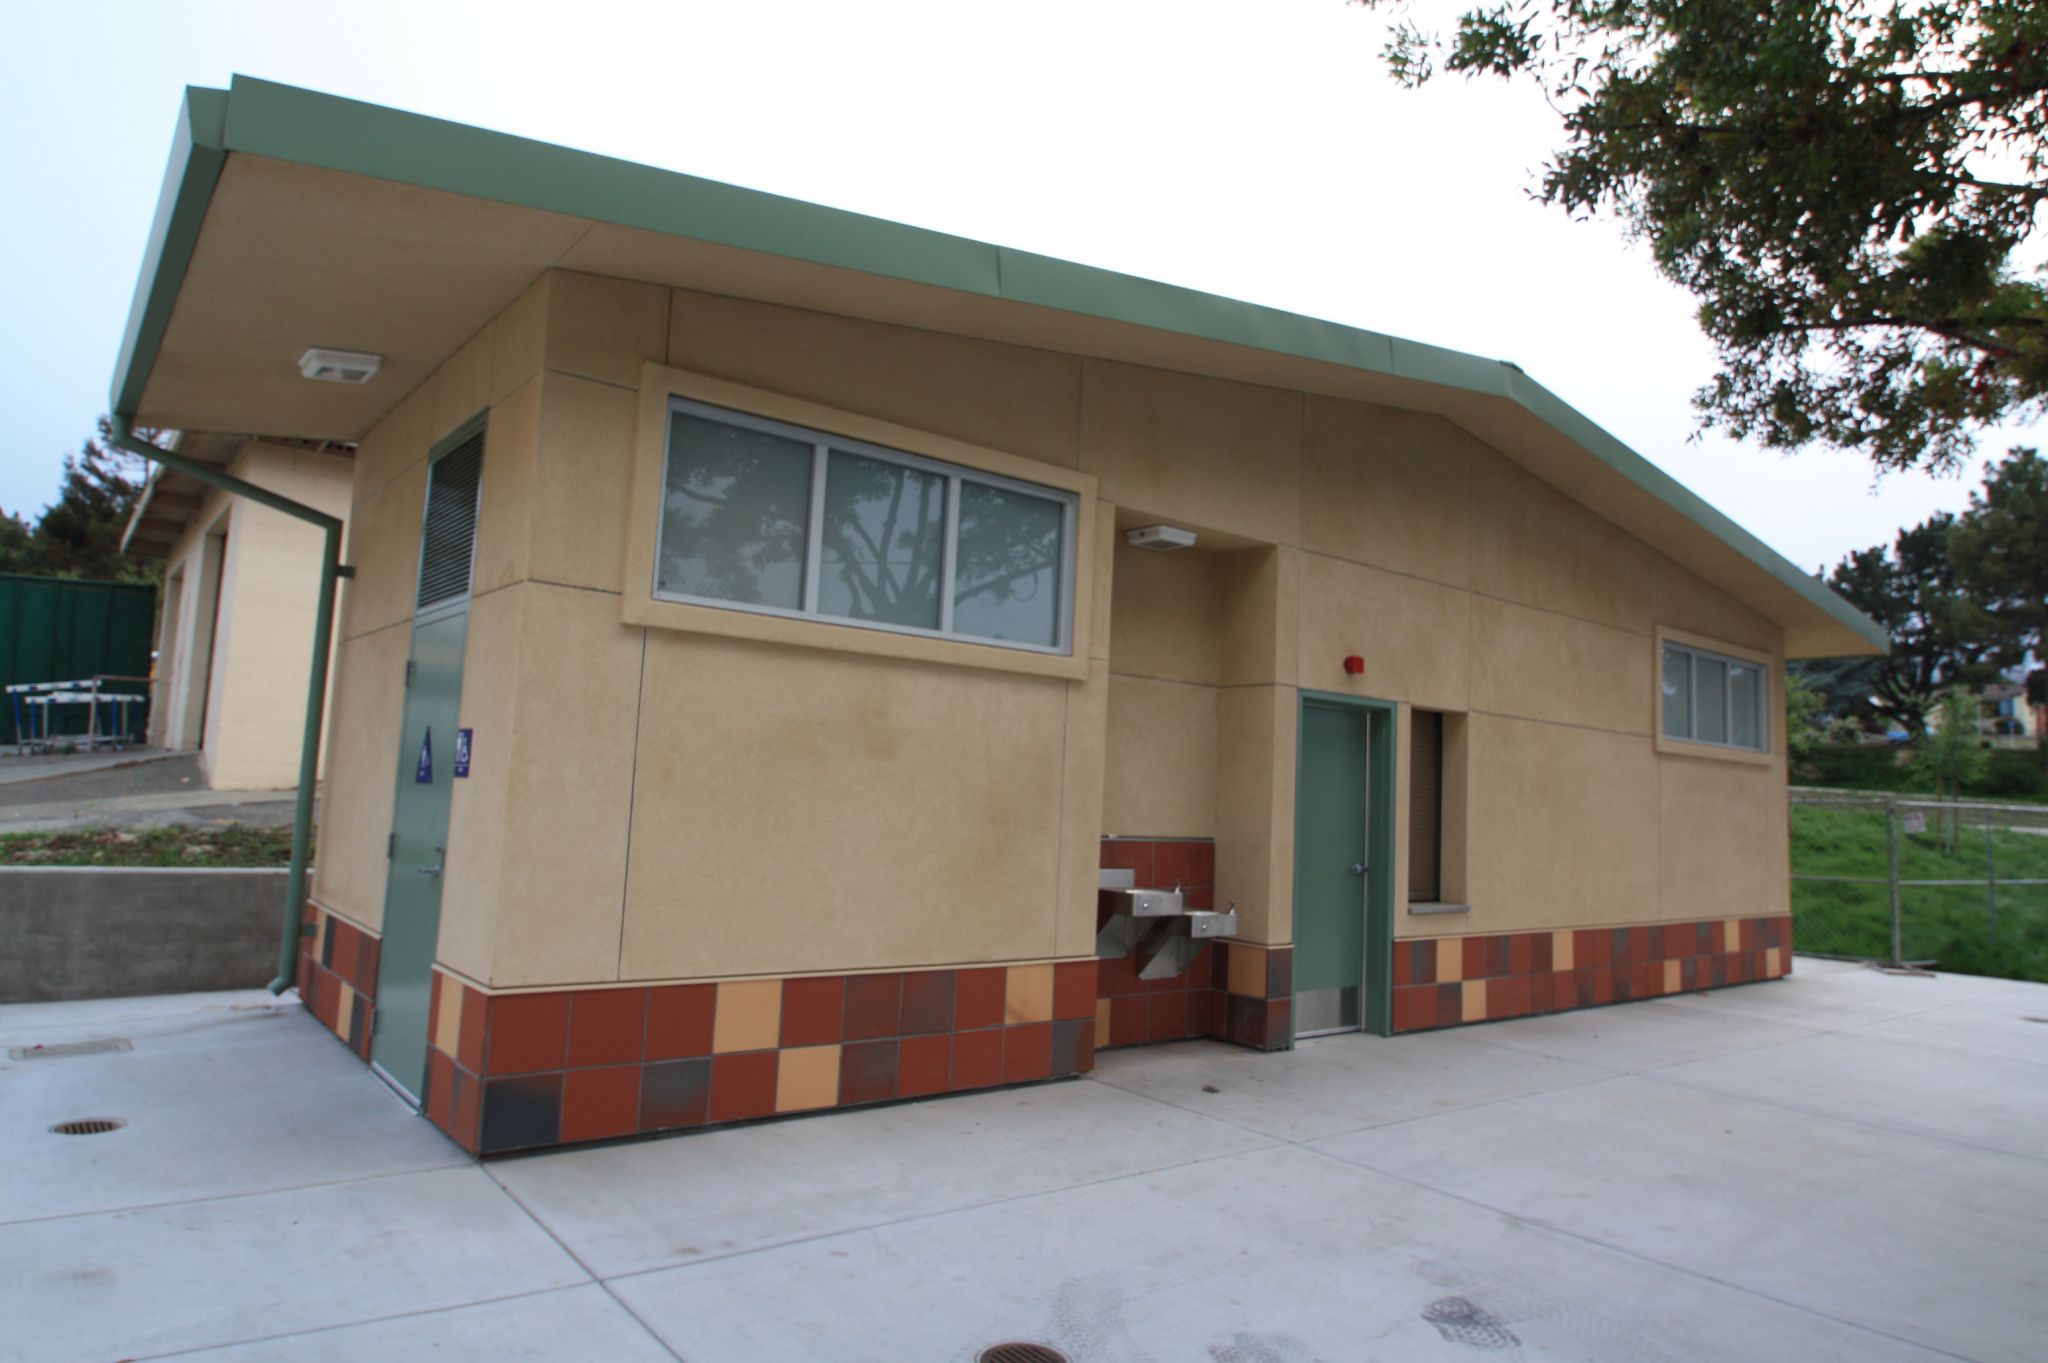 San Mateo Union High School Modular Restrooms